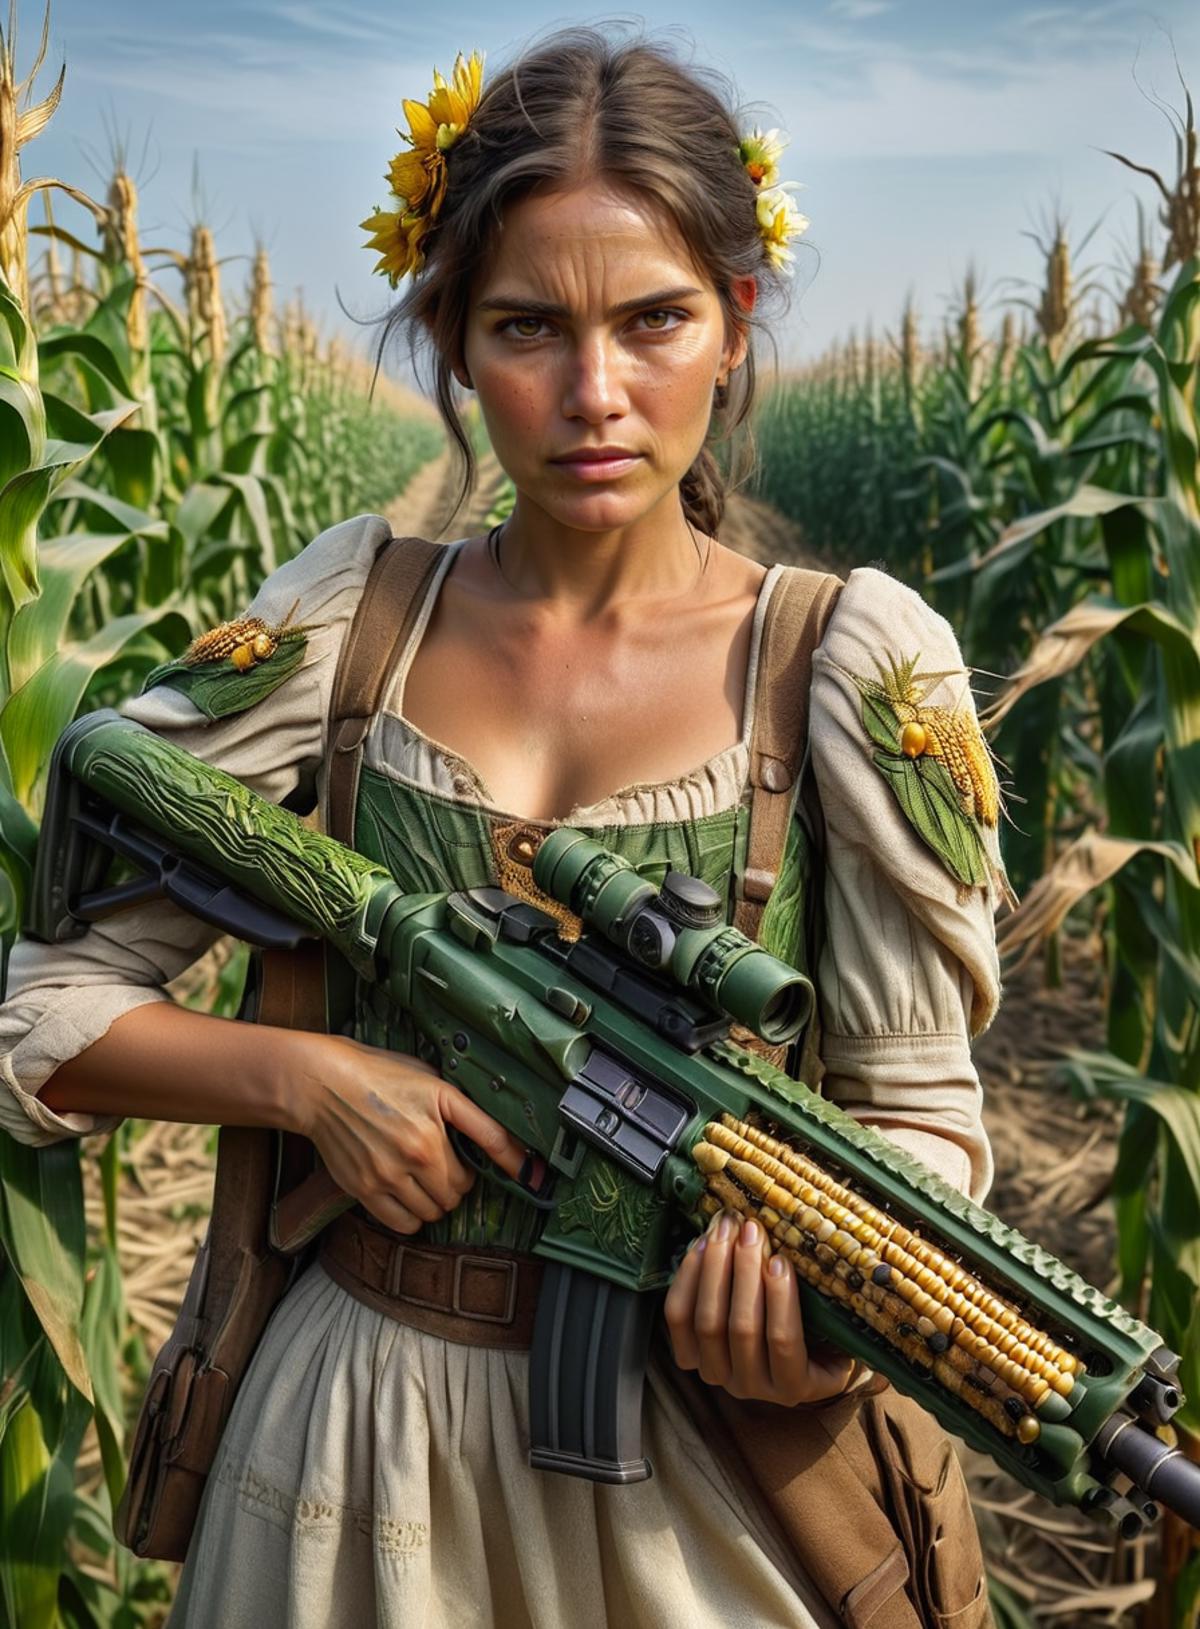 Woman in green dress holding a gun in a cornfield, wearing a flower in her hair.